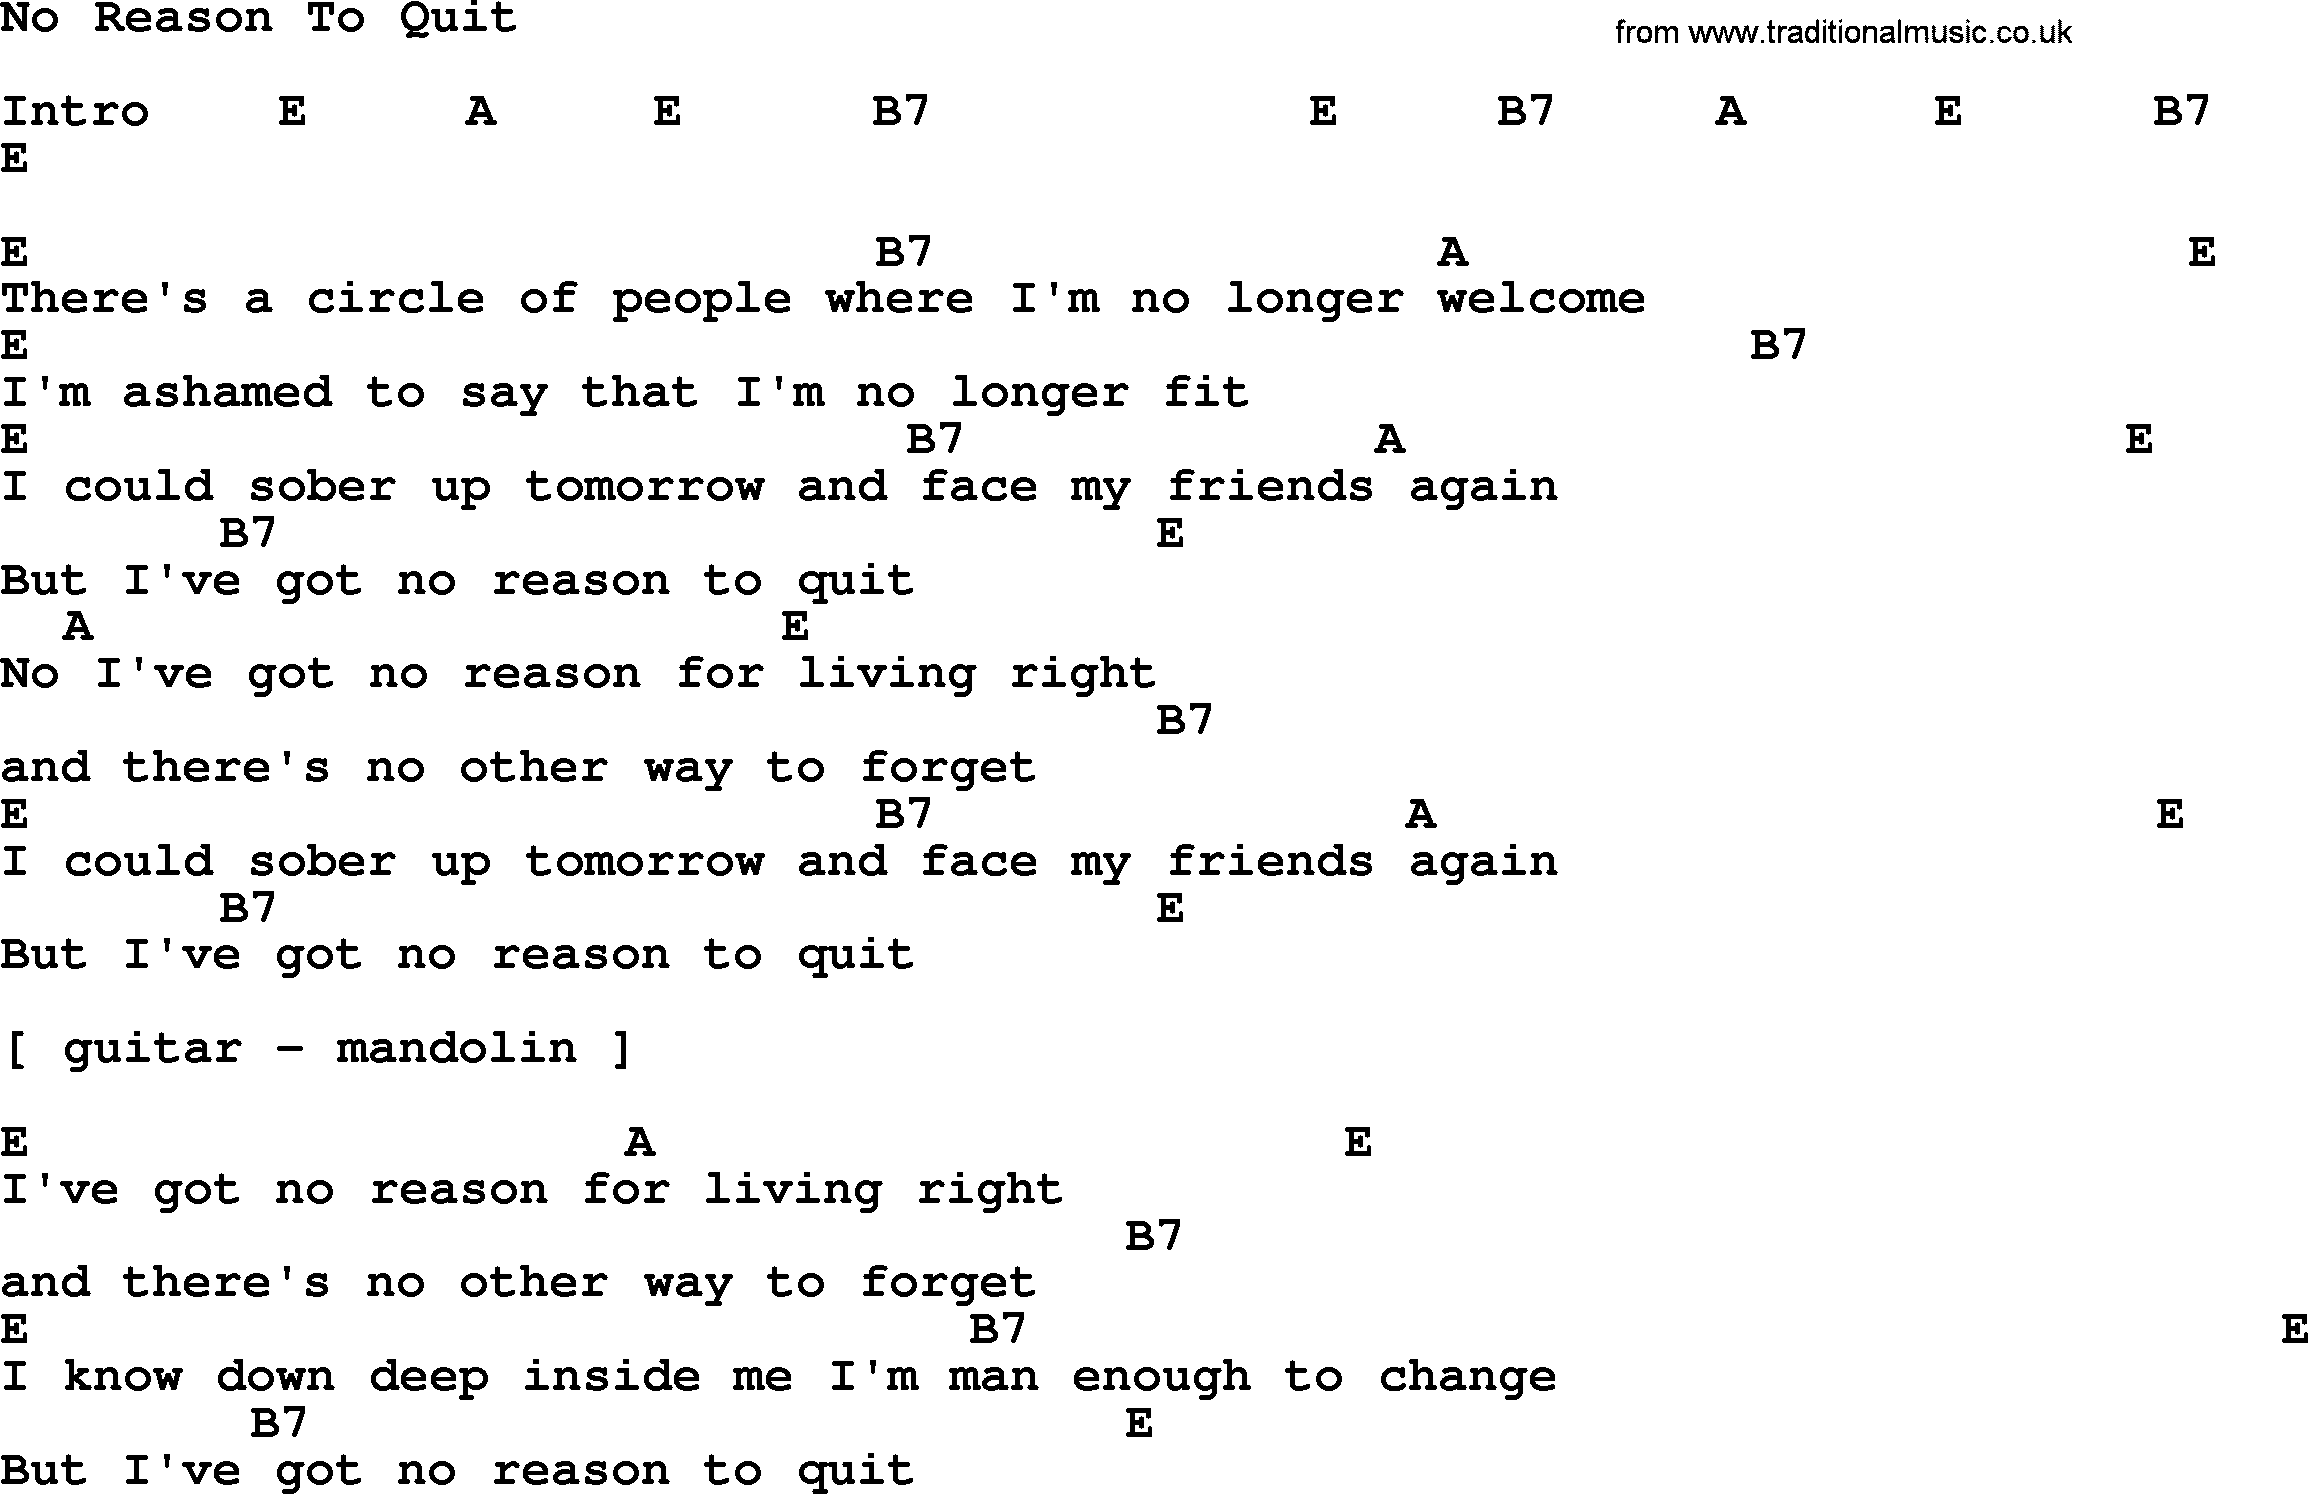 Merle Haggard song: No Reason To Quit, lyrics and chords